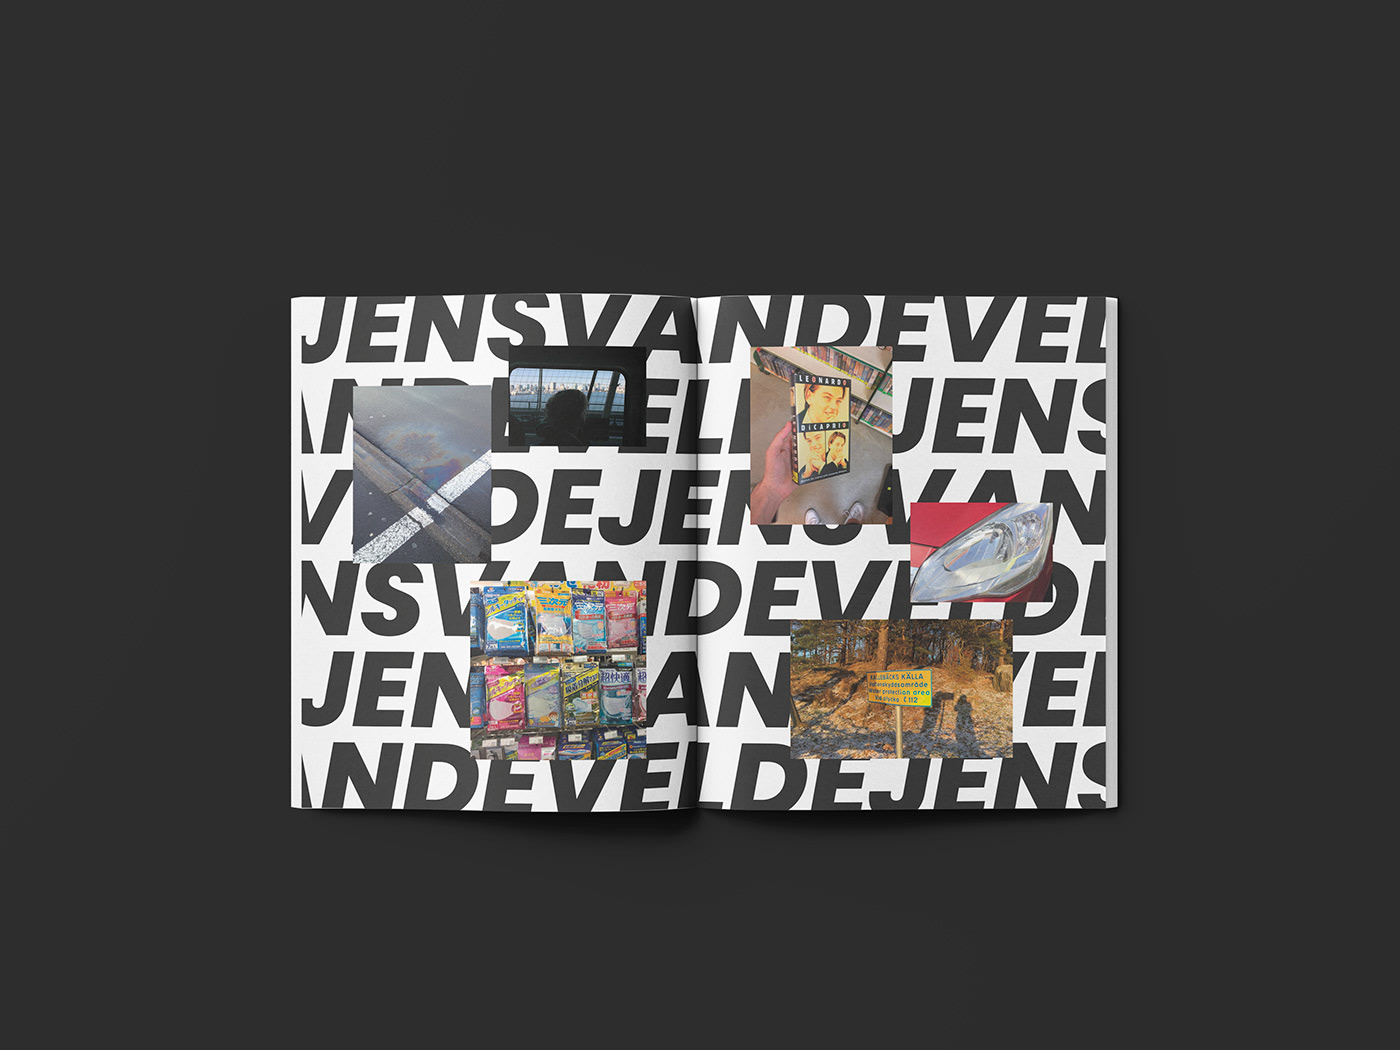 Jens magazine personal editorial stickerbook